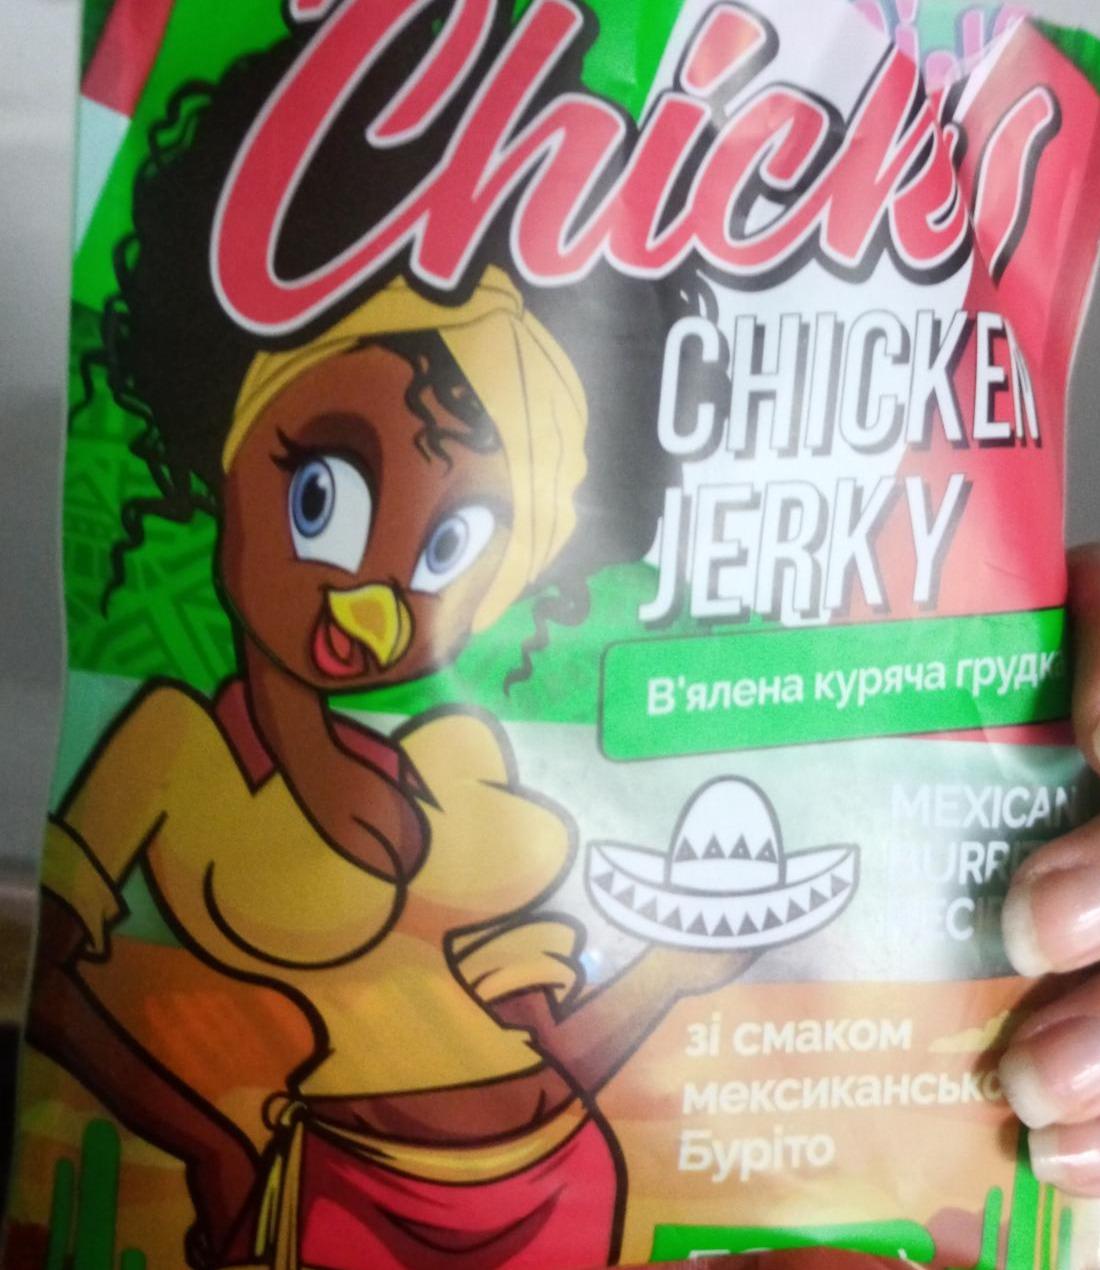 Фото - вяленая куриная грудка со вкусом мексиканского буритто Chick's